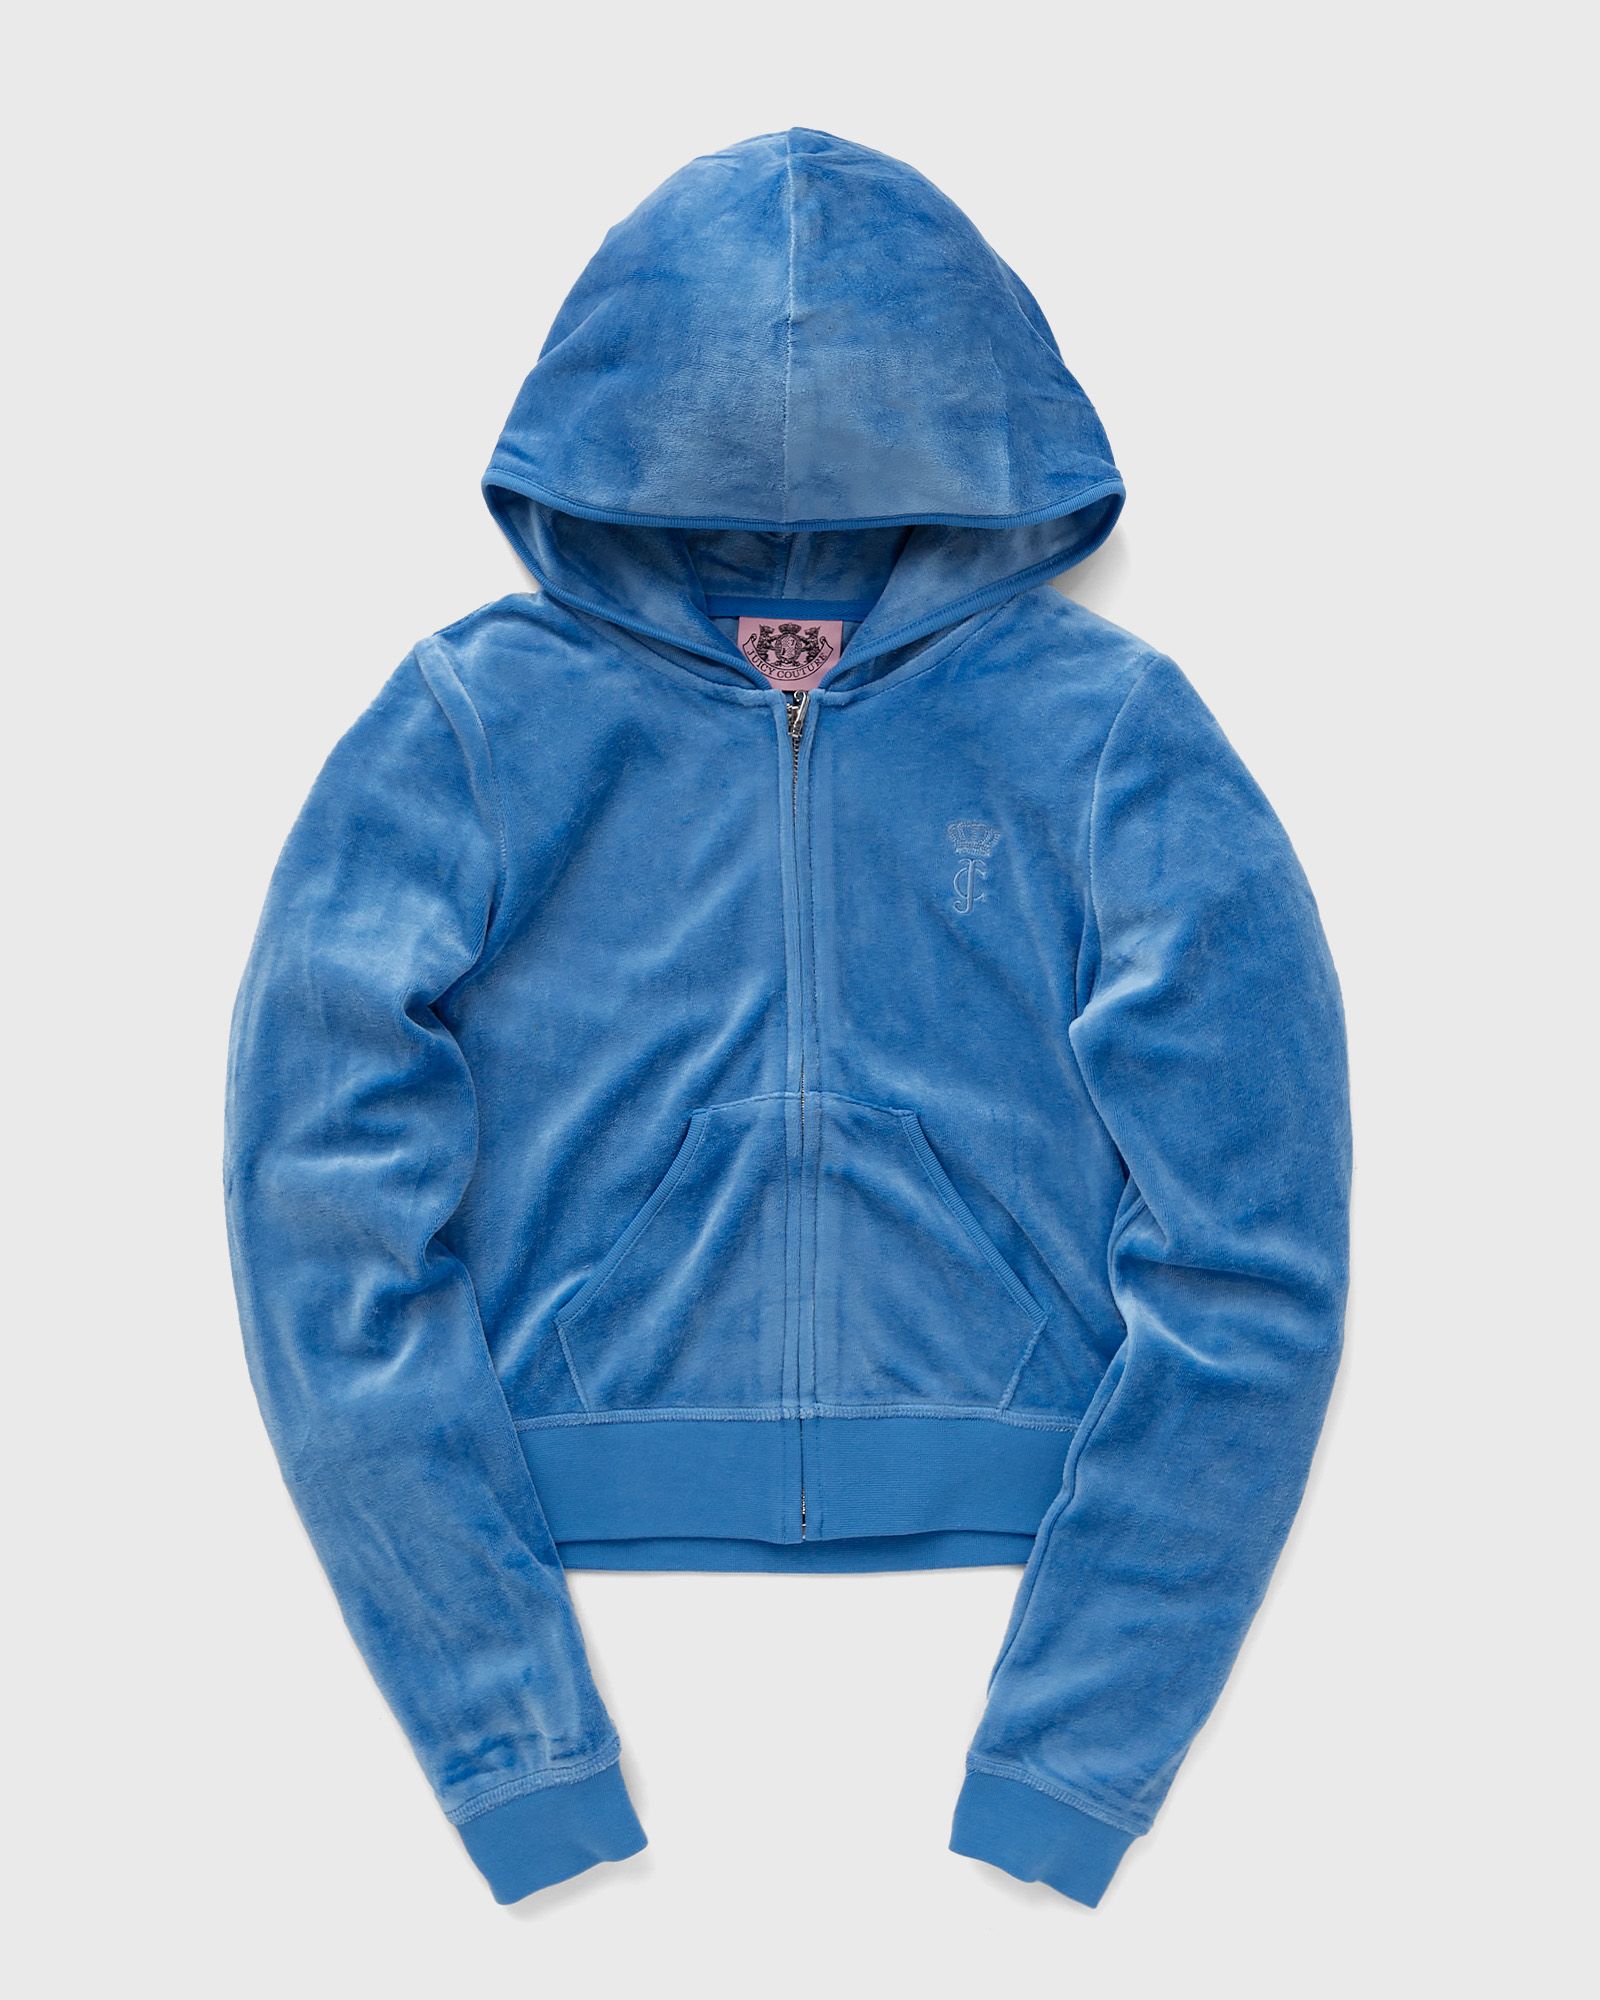 Juicy Couture - wmns robyn hoodie women hoodies|zippers blue in größe:xs